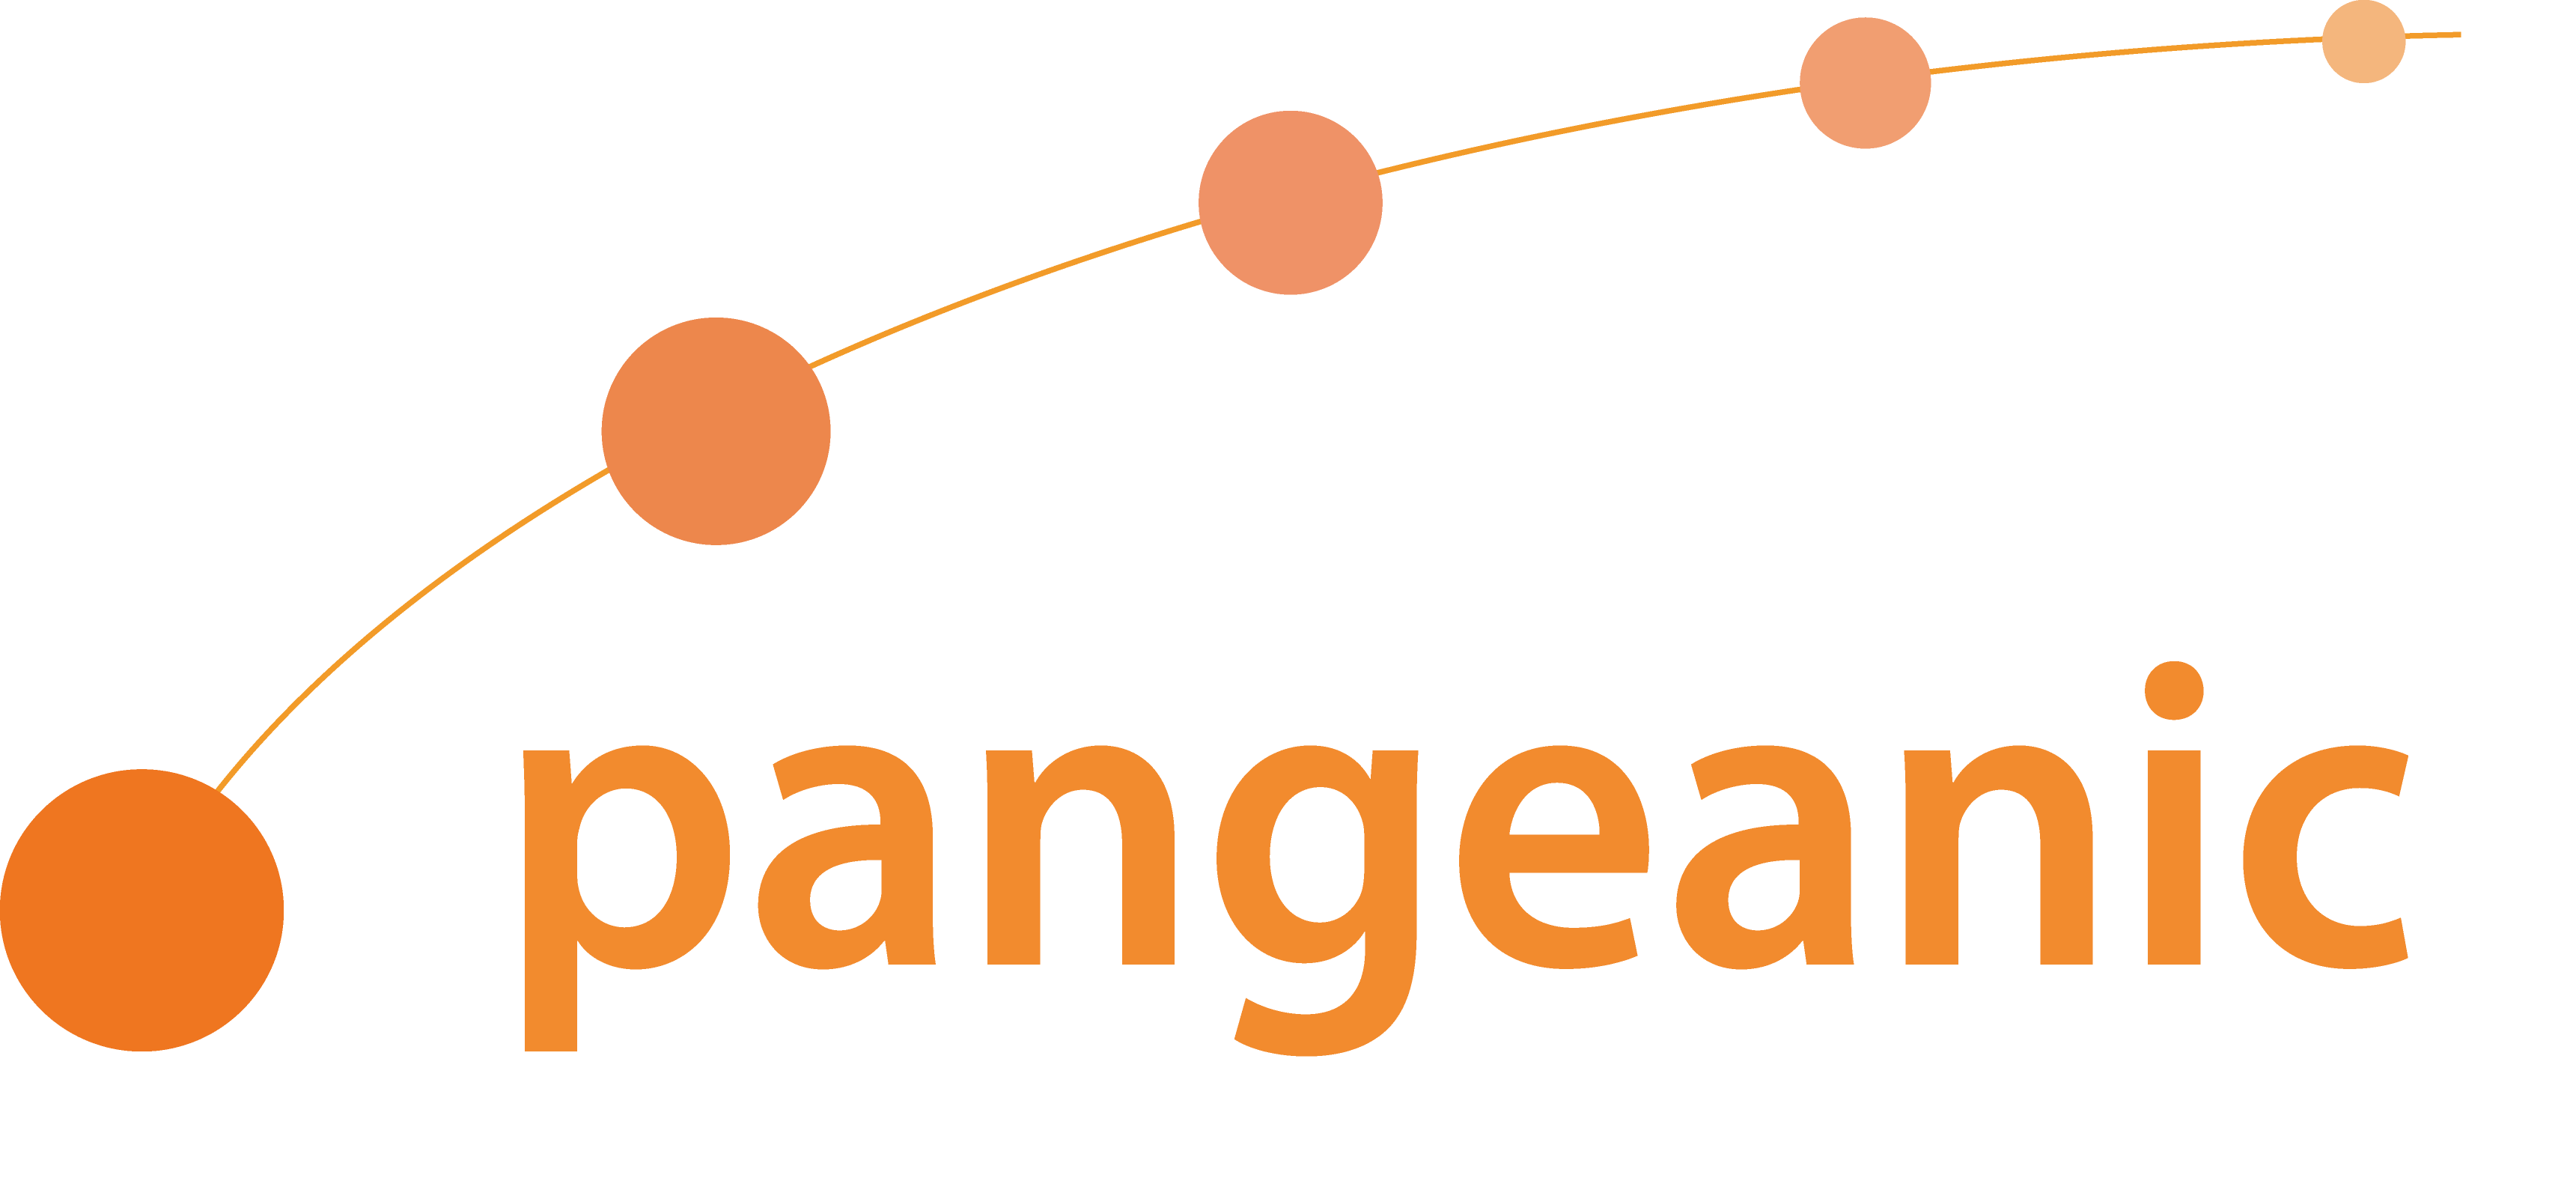 PANGEANIC LANGUAGE TECHNOLOGIES AND TRANSLATION SERVICES